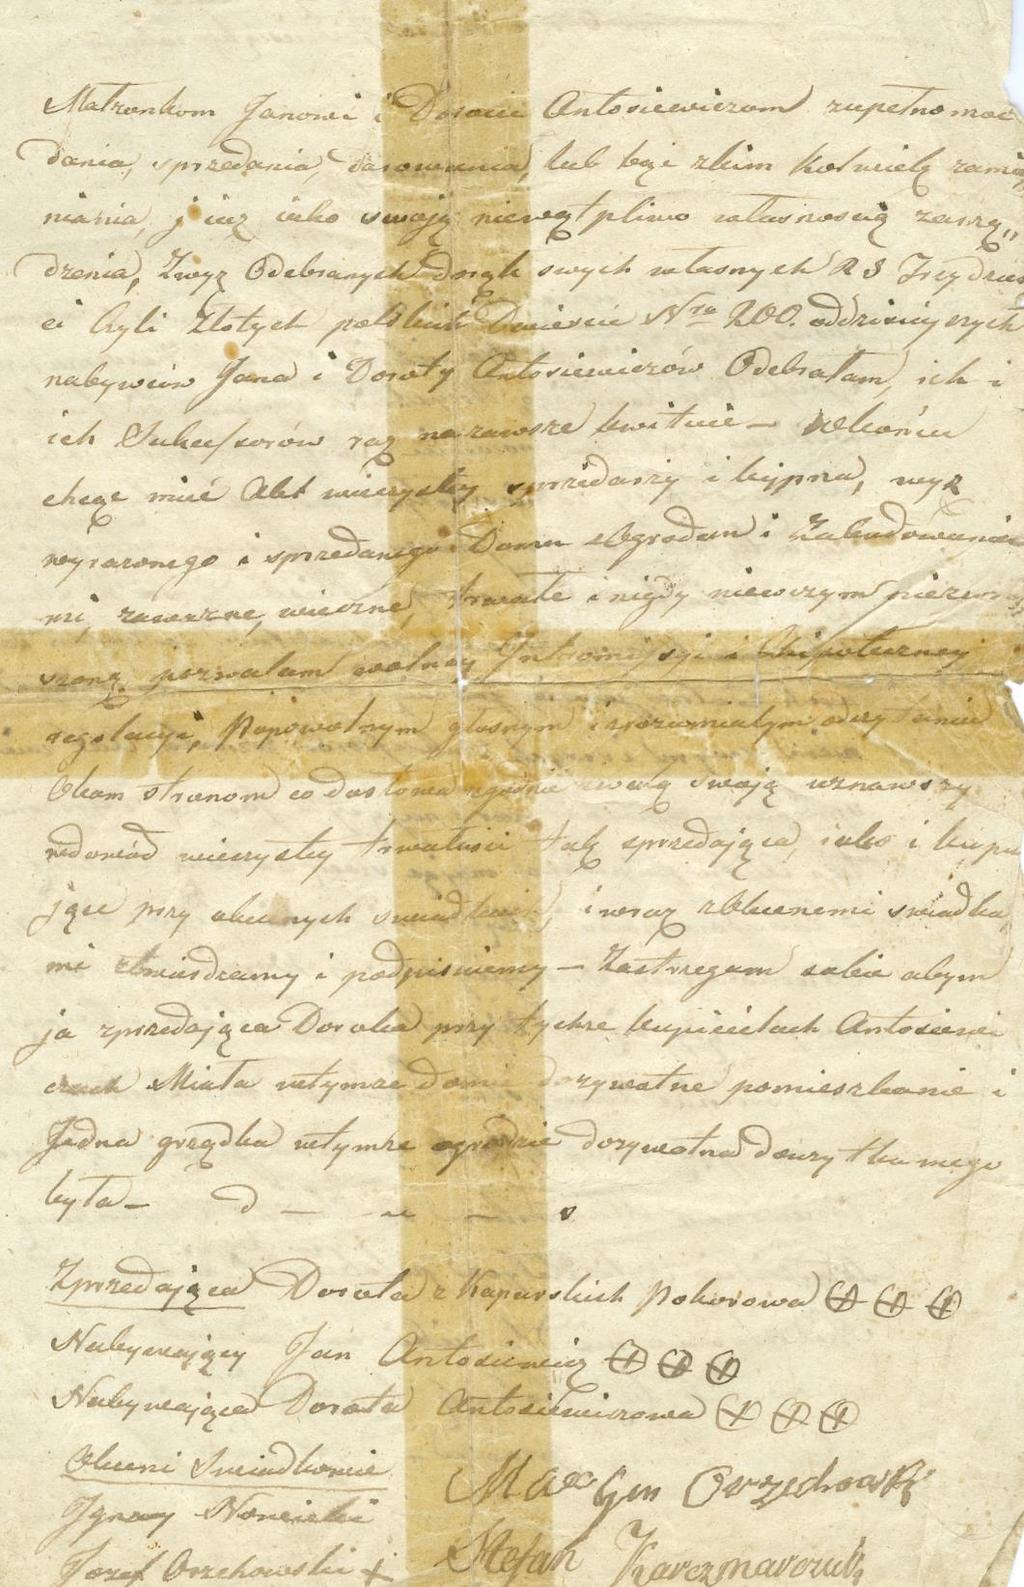 12 Dokument 11 Rok 1850, 20 kwietnia.